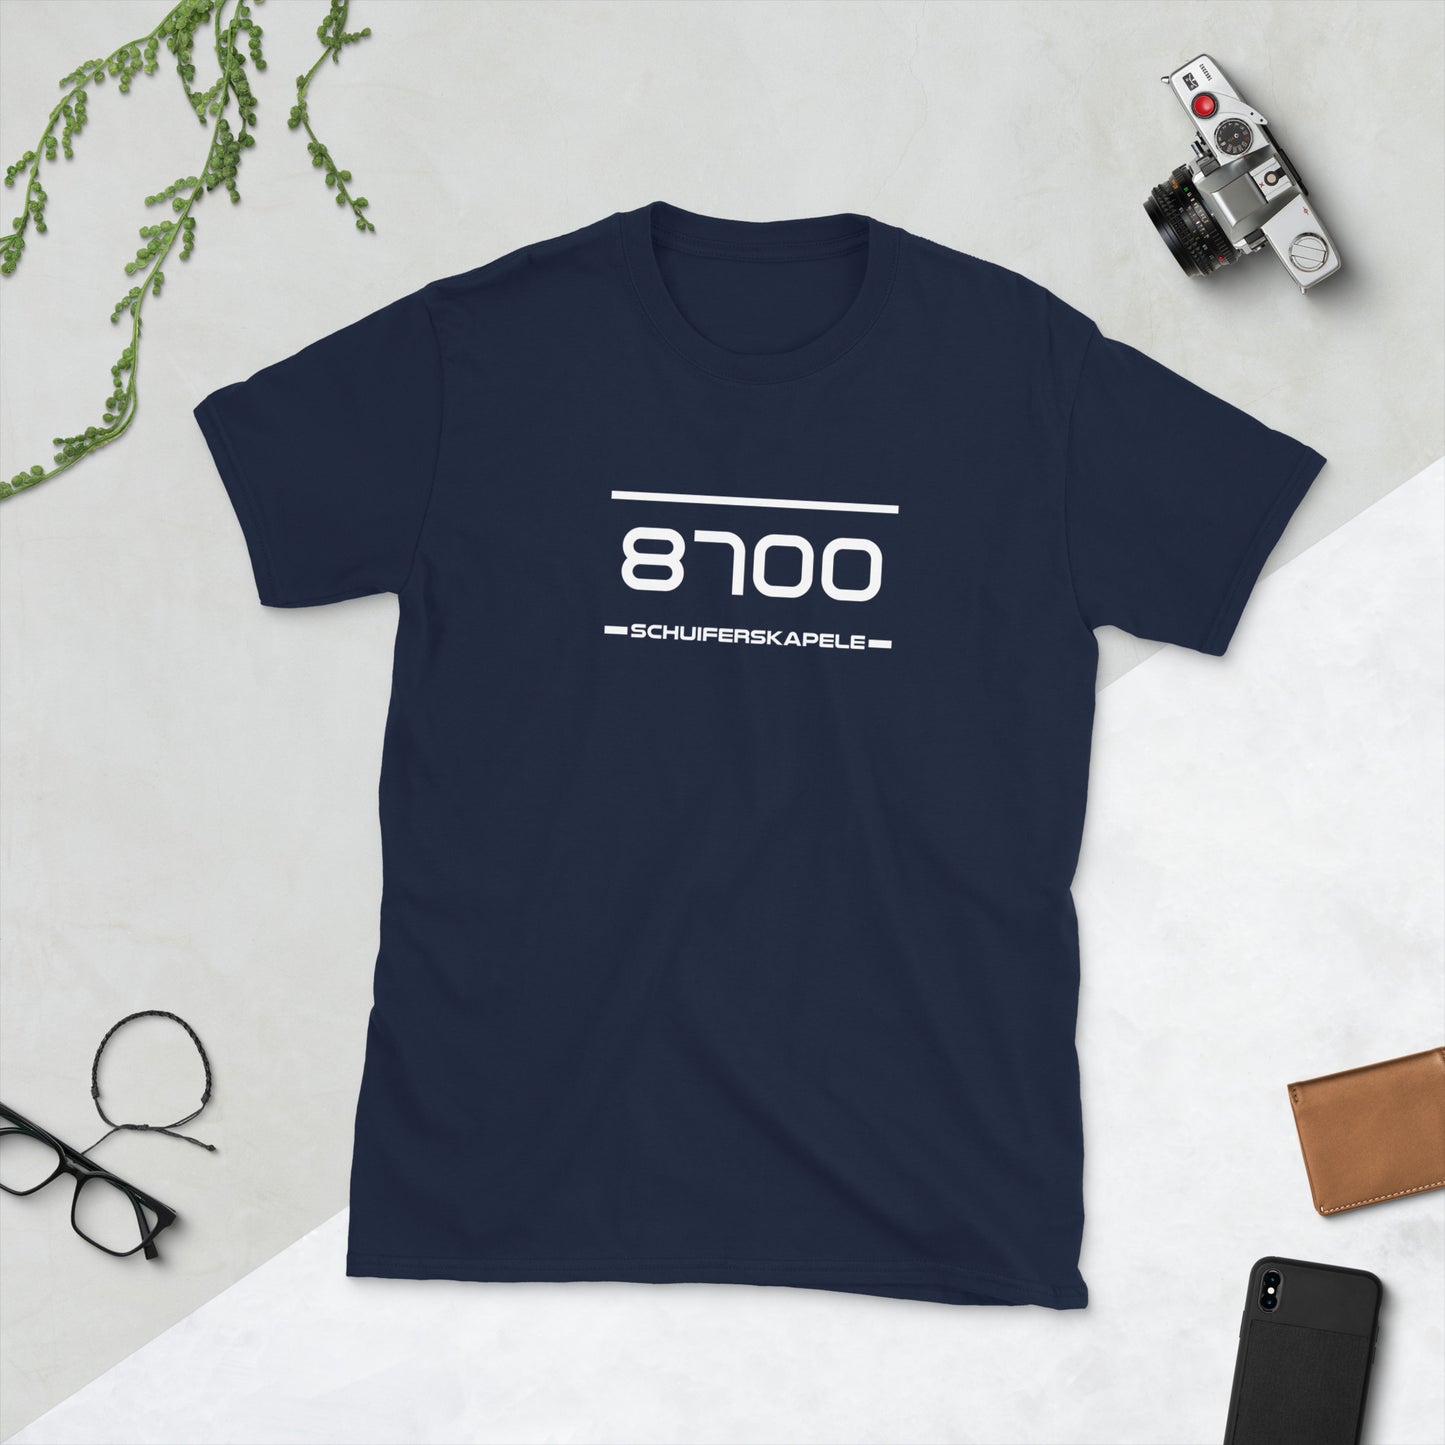 Tshirt - 8700 - Schuiferskapelle